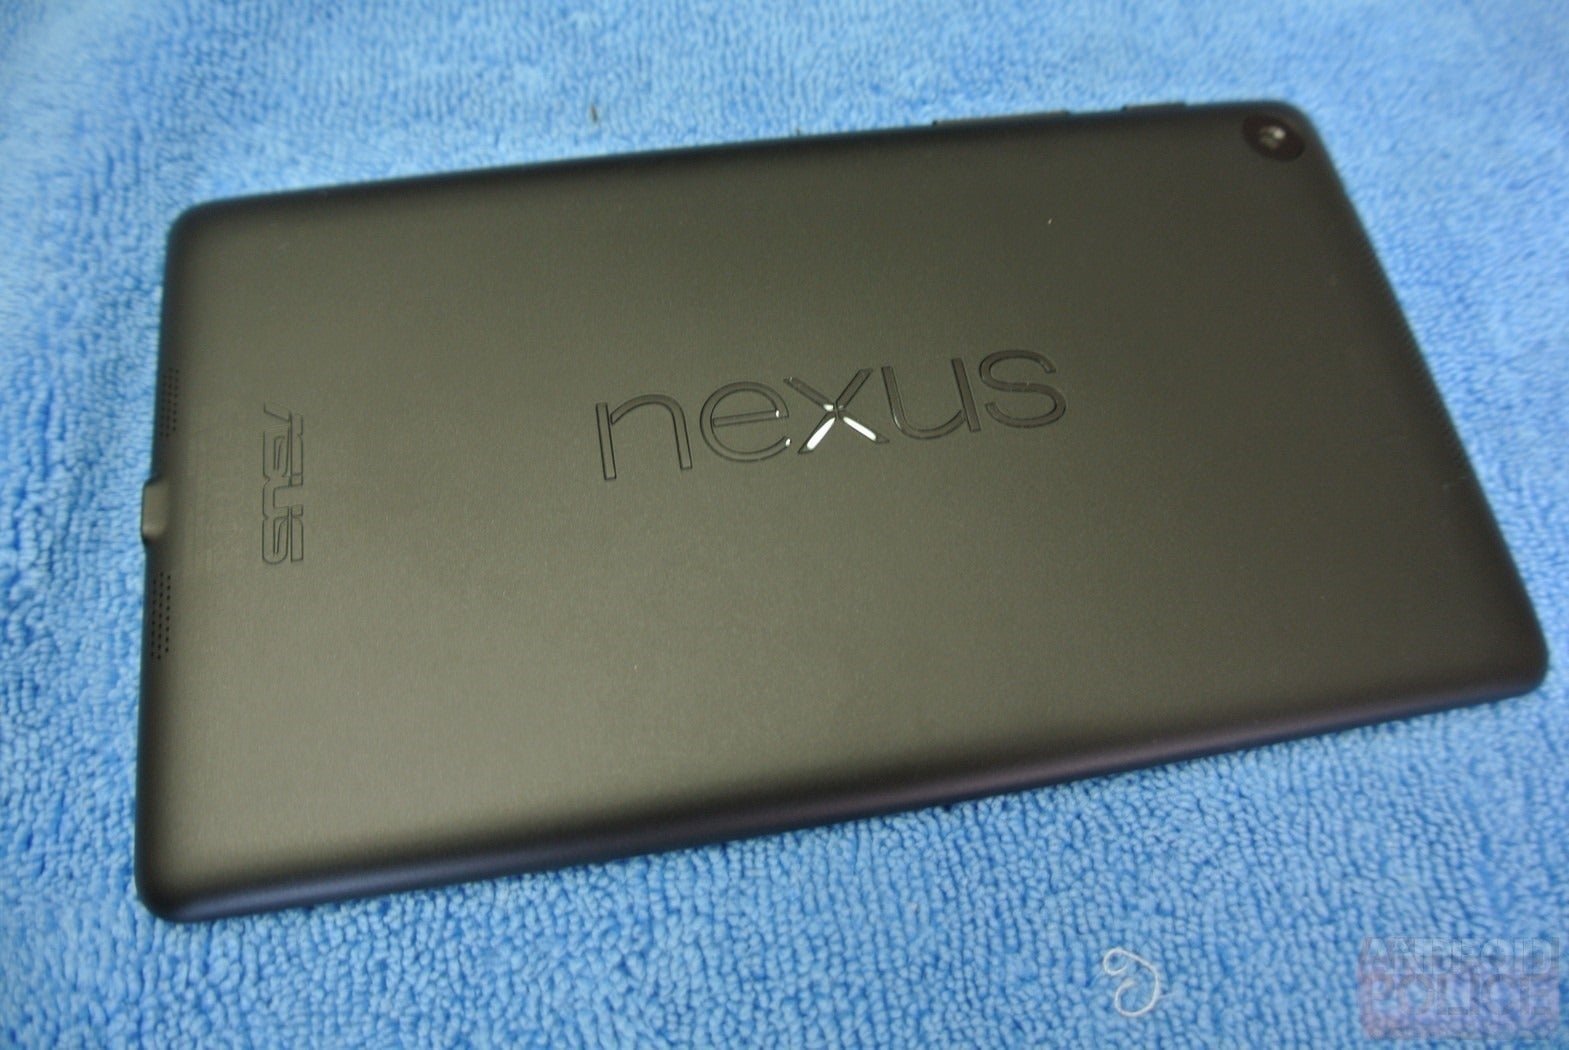 Logo Nexus en la Nexus 7 II